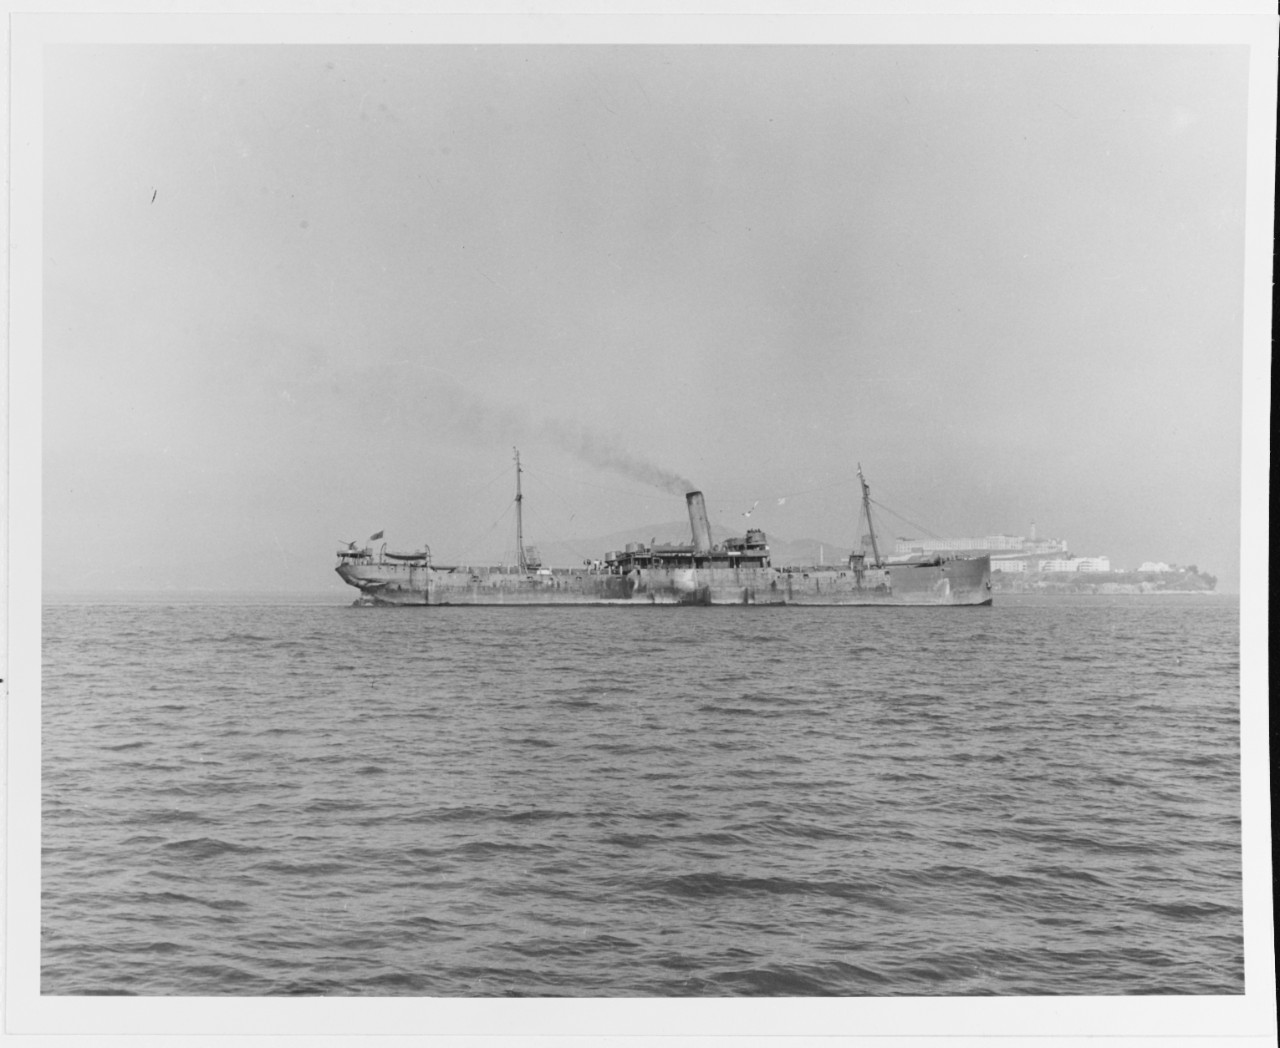 S.S. LANSING (British Merchant Freighter, 1890-1948 under this name 1904-1946)